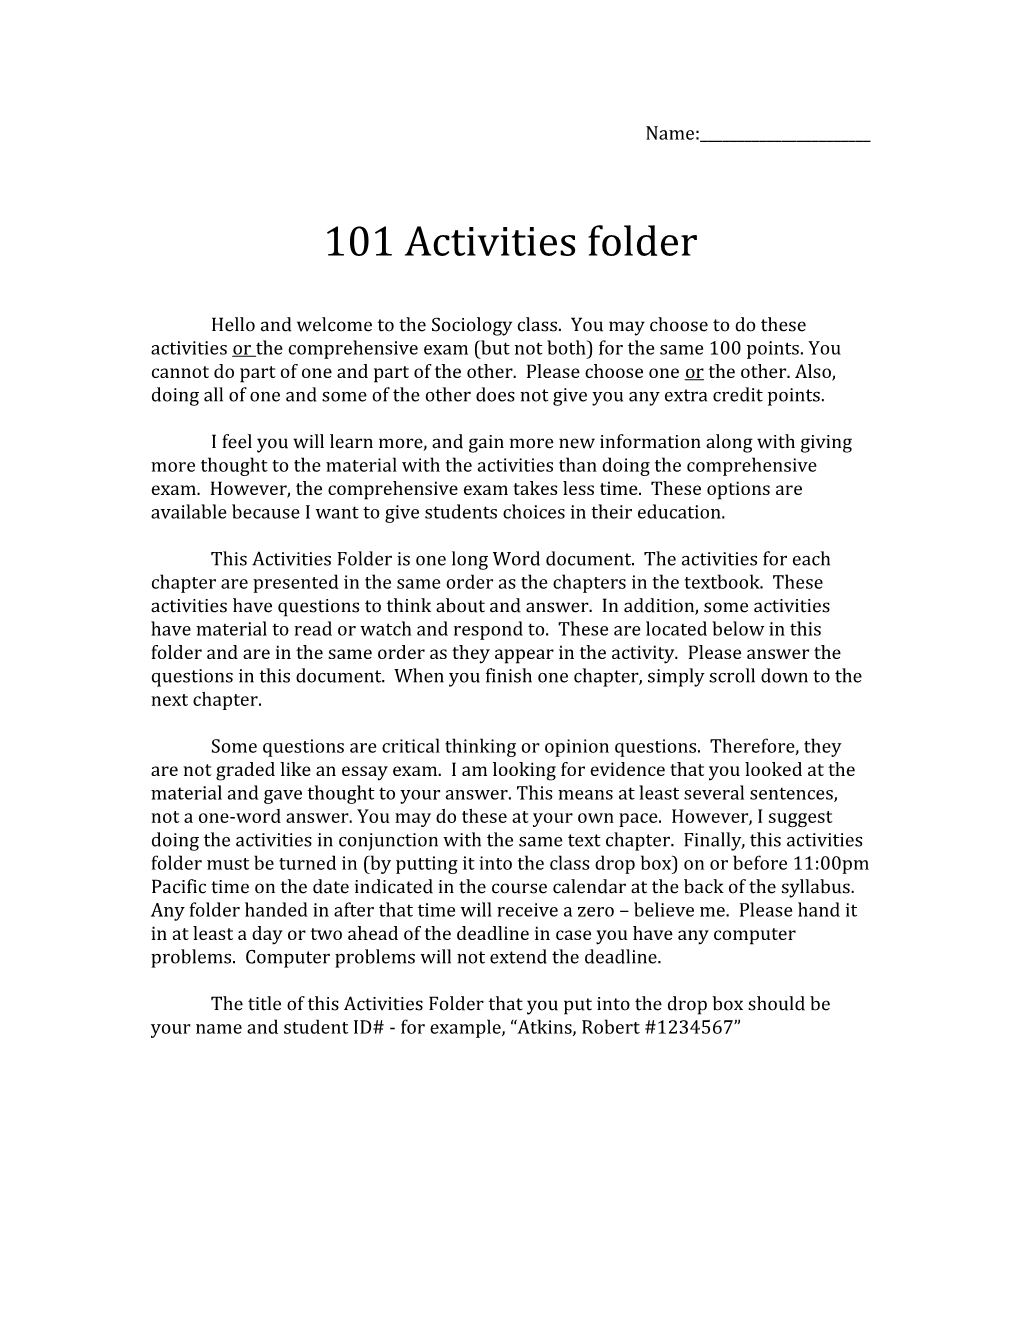 101 Activities Folder